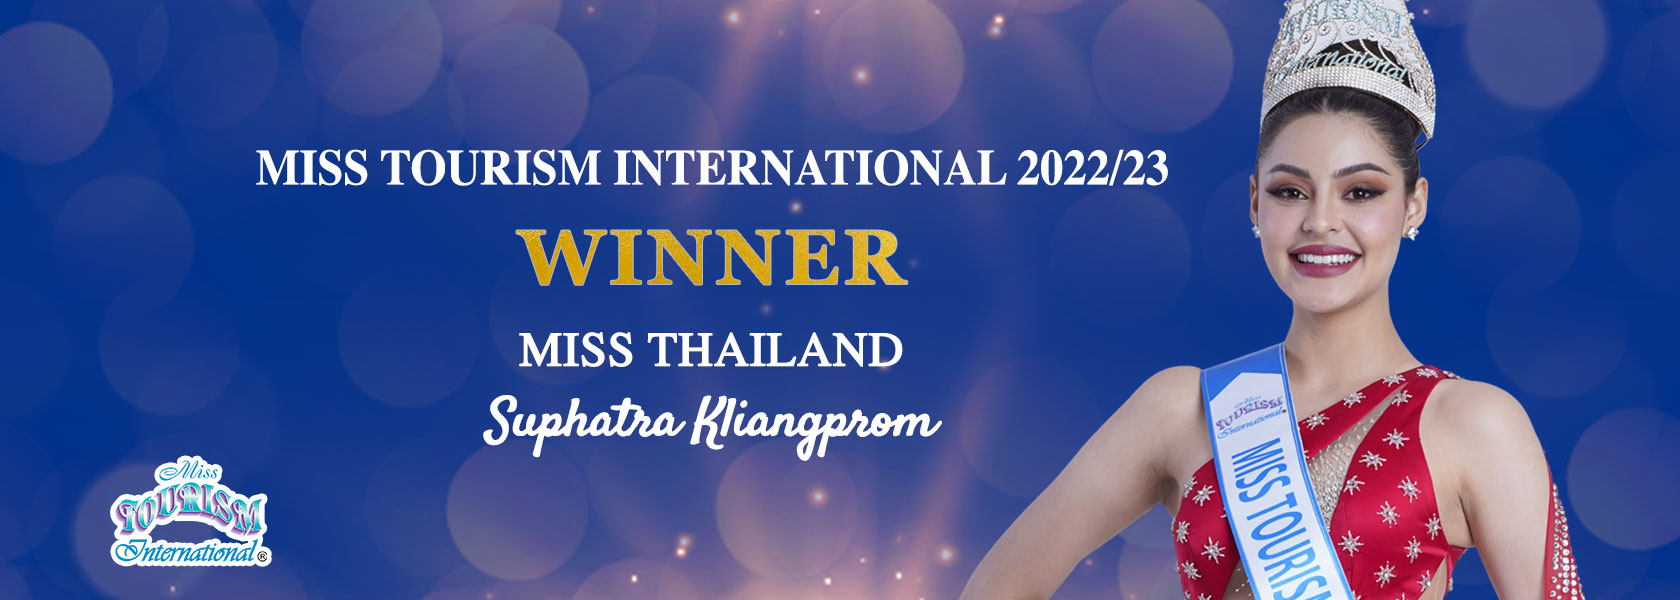 Miss Tourism International Beauty Pageant